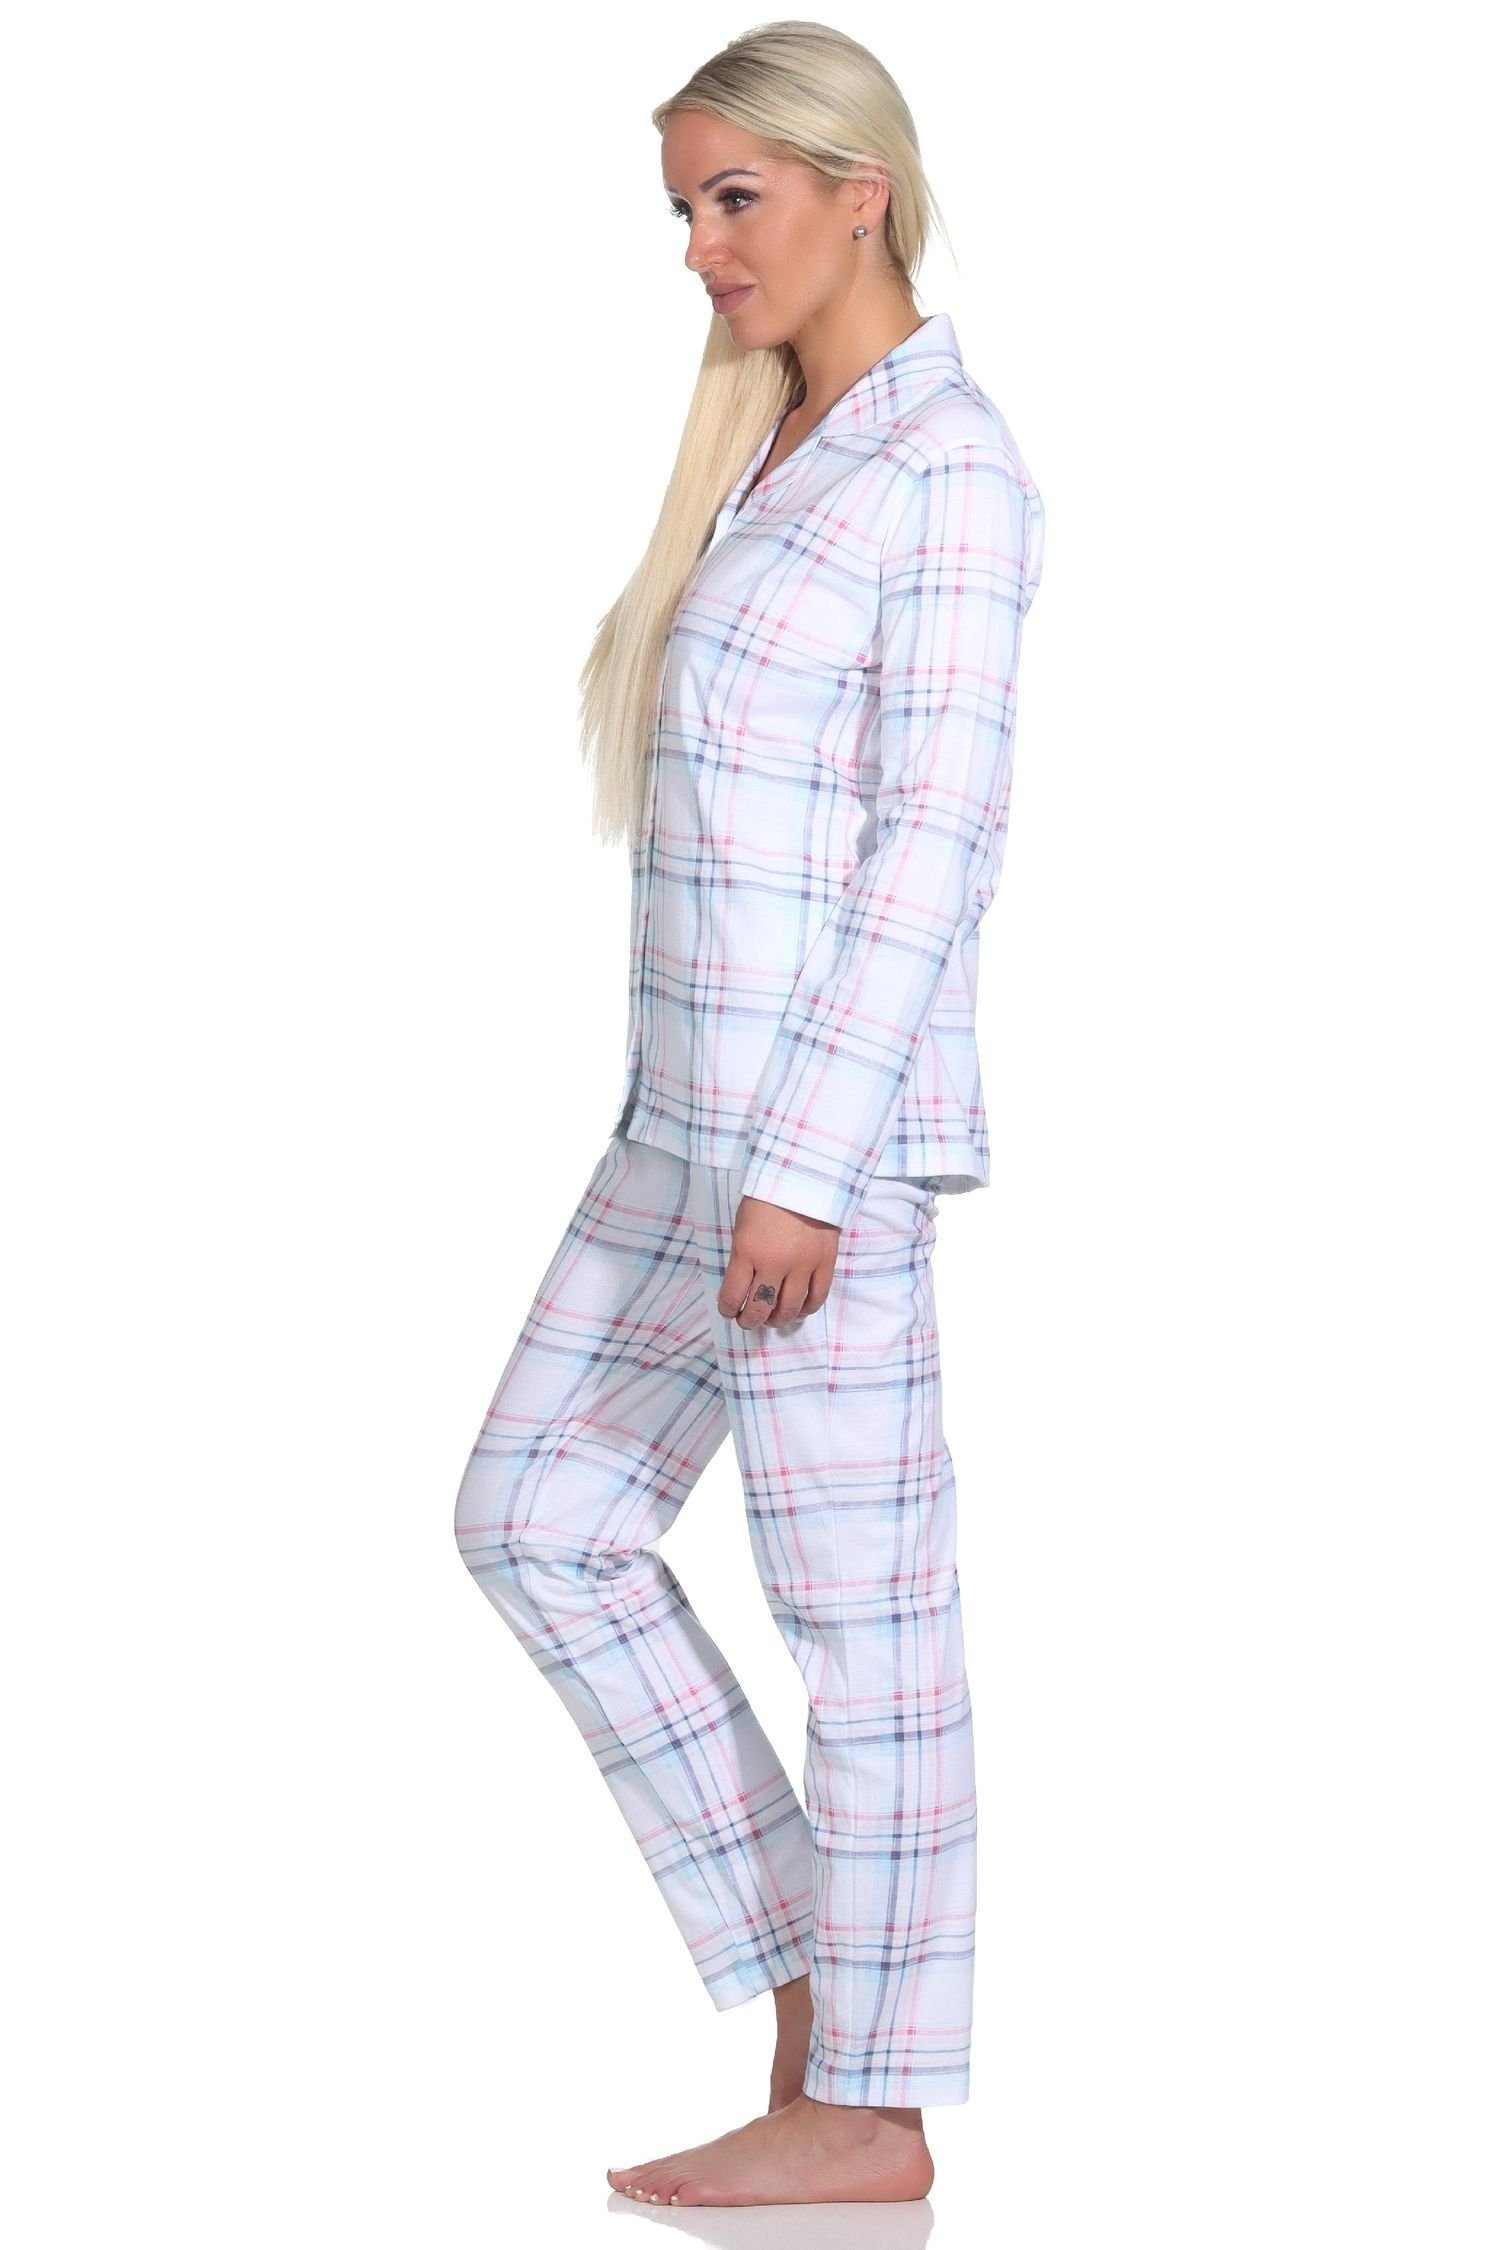 aus Damen Karo zum Pyjama Normann Optik Pyjama in durchknöpfen Jersey Single